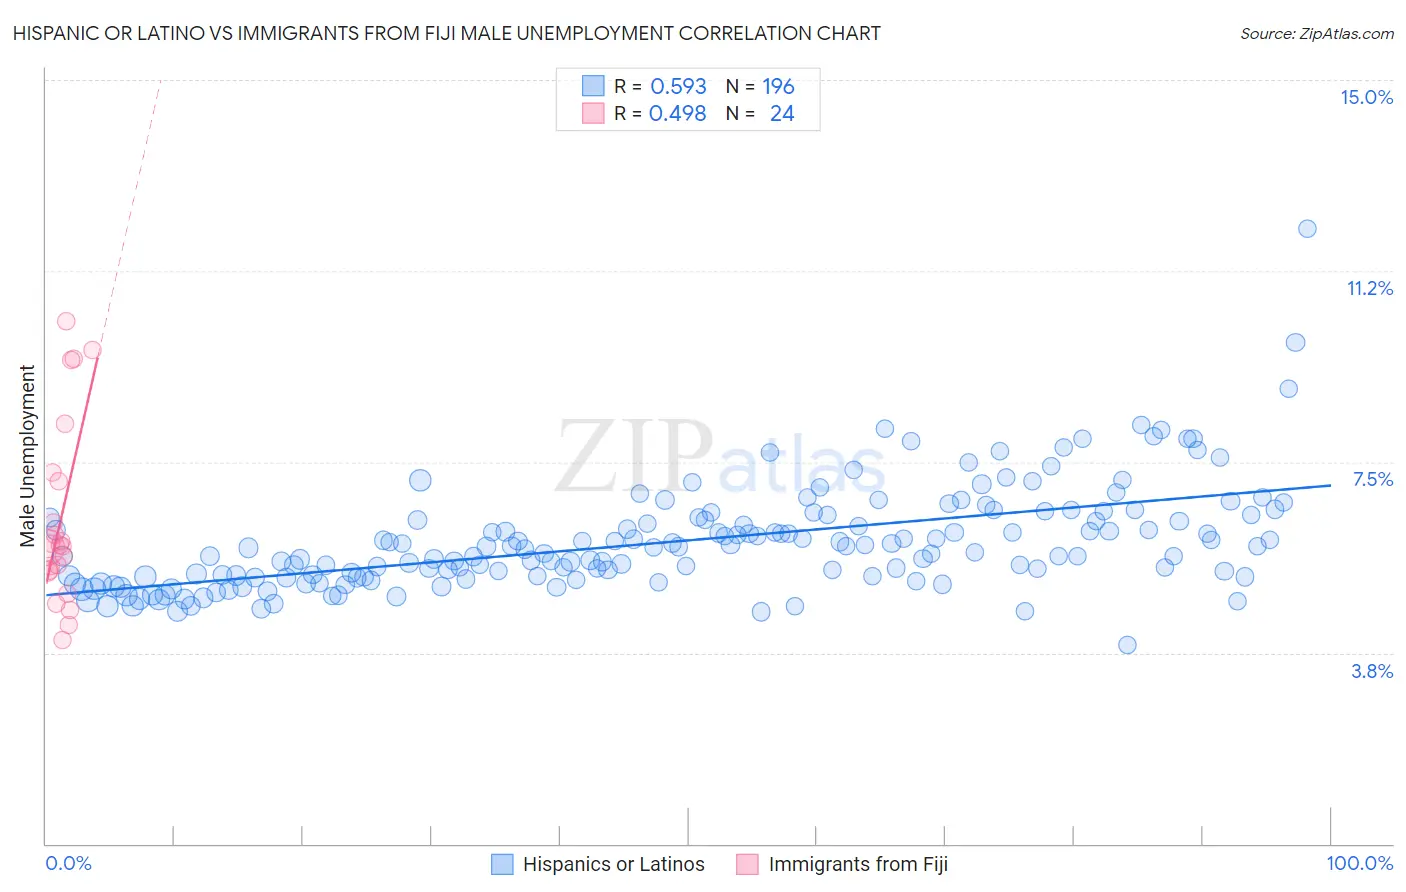 Hispanic or Latino vs Immigrants from Fiji Male Unemployment